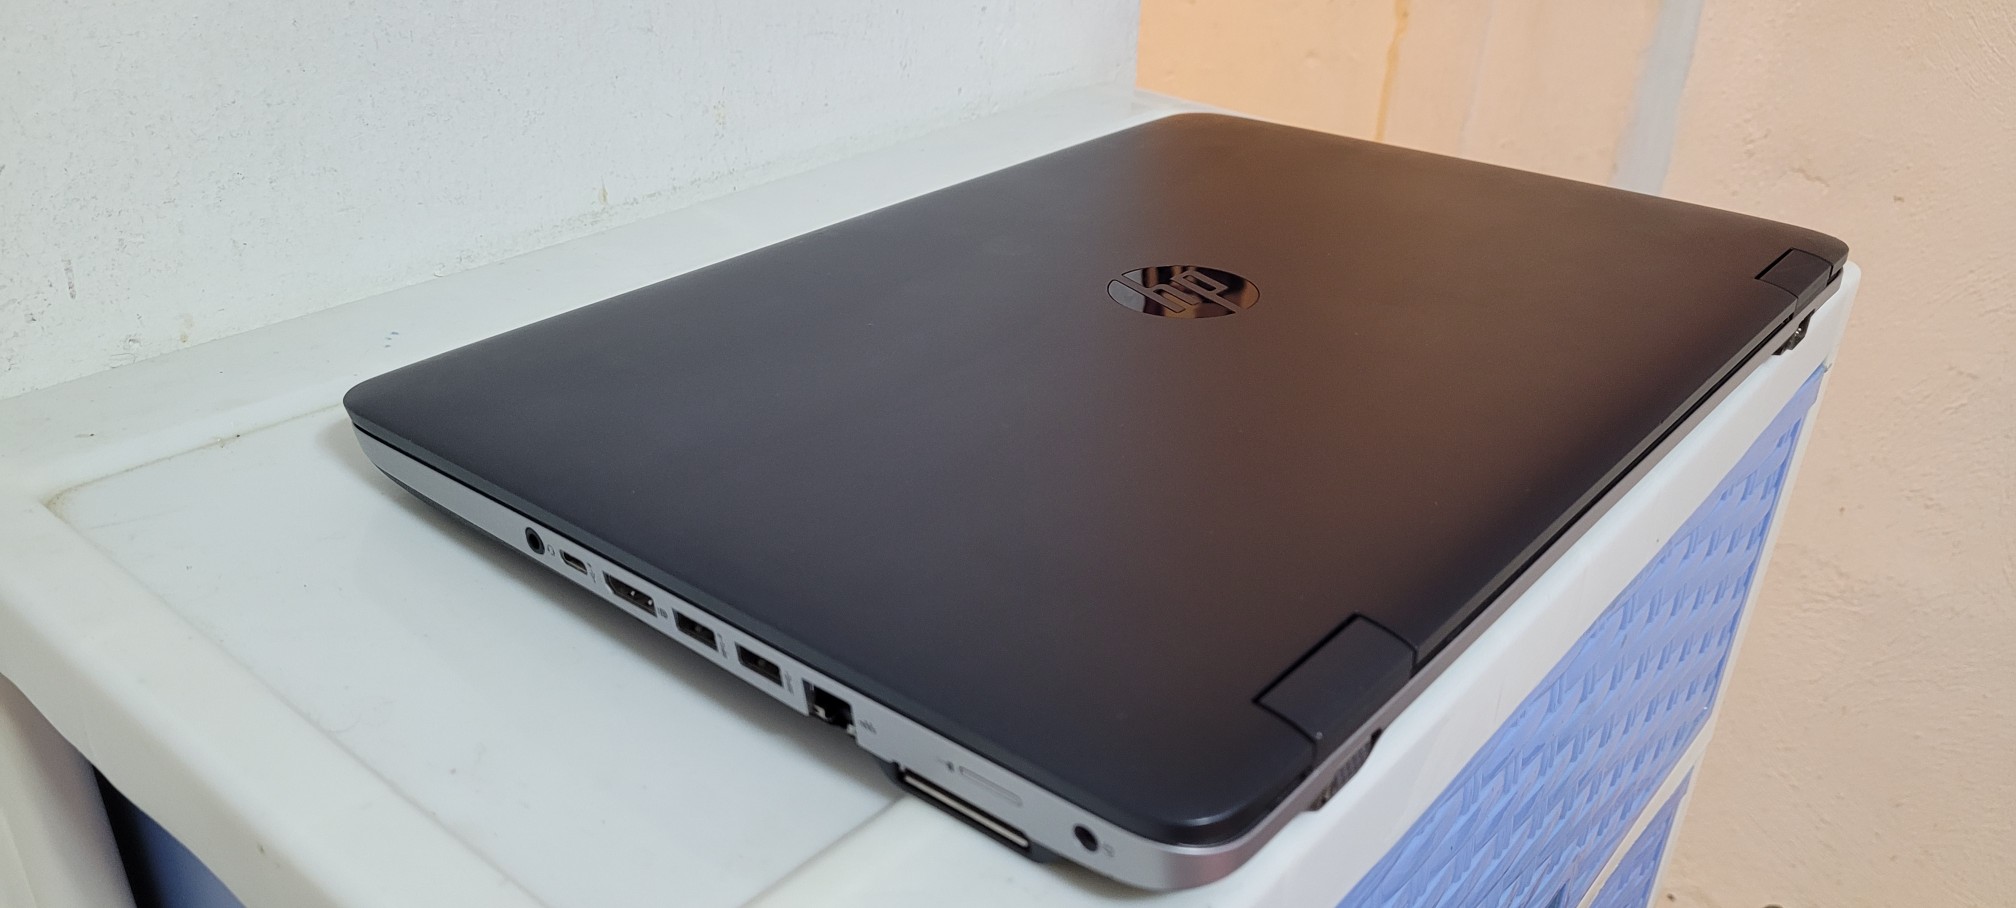 computadoras y laptops - Laptop hp G2 17 Pulg Core i5 6ta Ram 8gb ddr4 Disco 256gb SSD USB TIPO-C 2